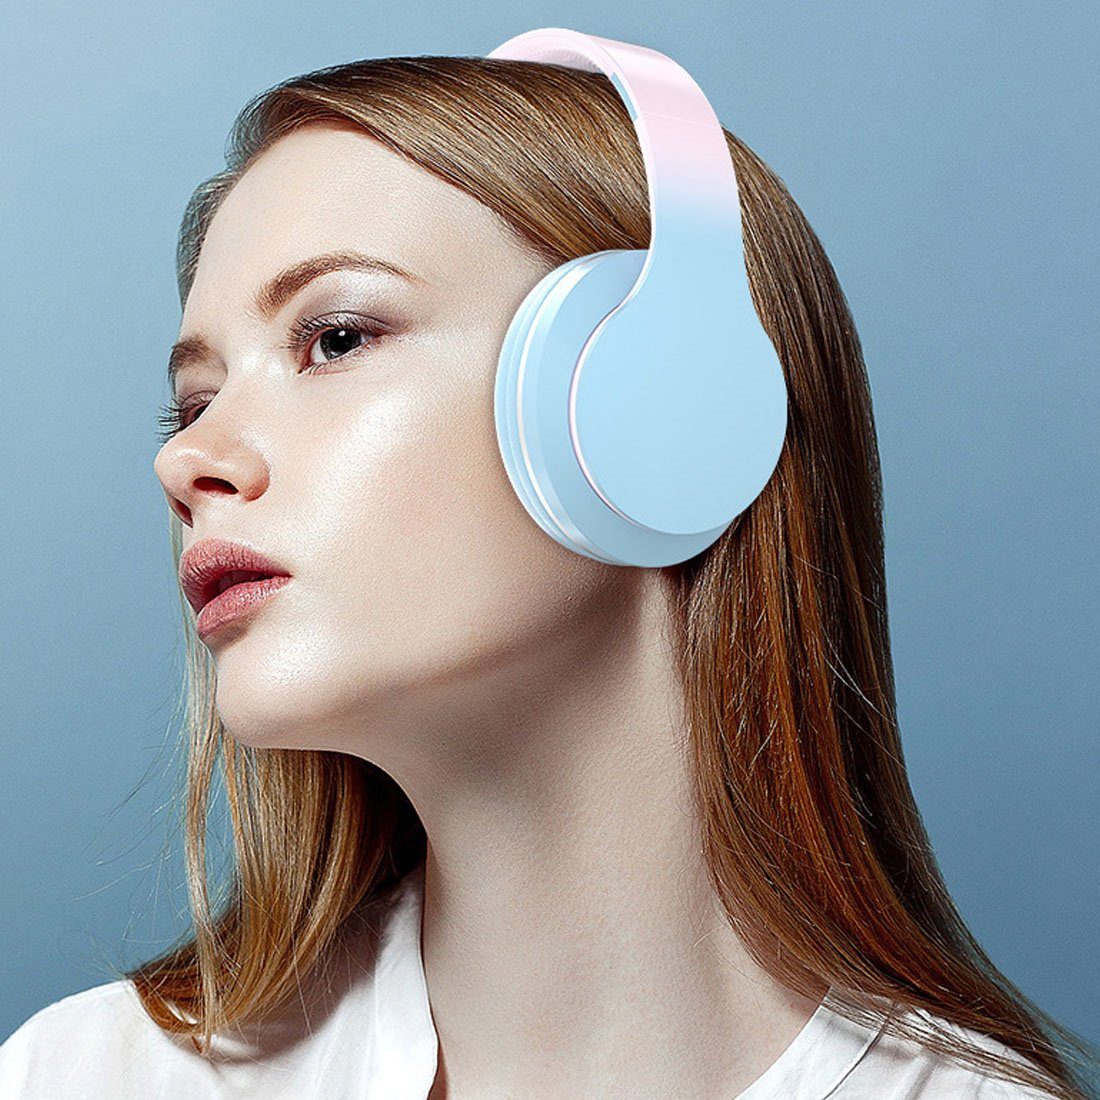 mit Bluetooth-Headset Bluetooth-Kopfhörer Drahtloses DÖRÖY Headset Gaming-Headset, grün Farbverlauf,